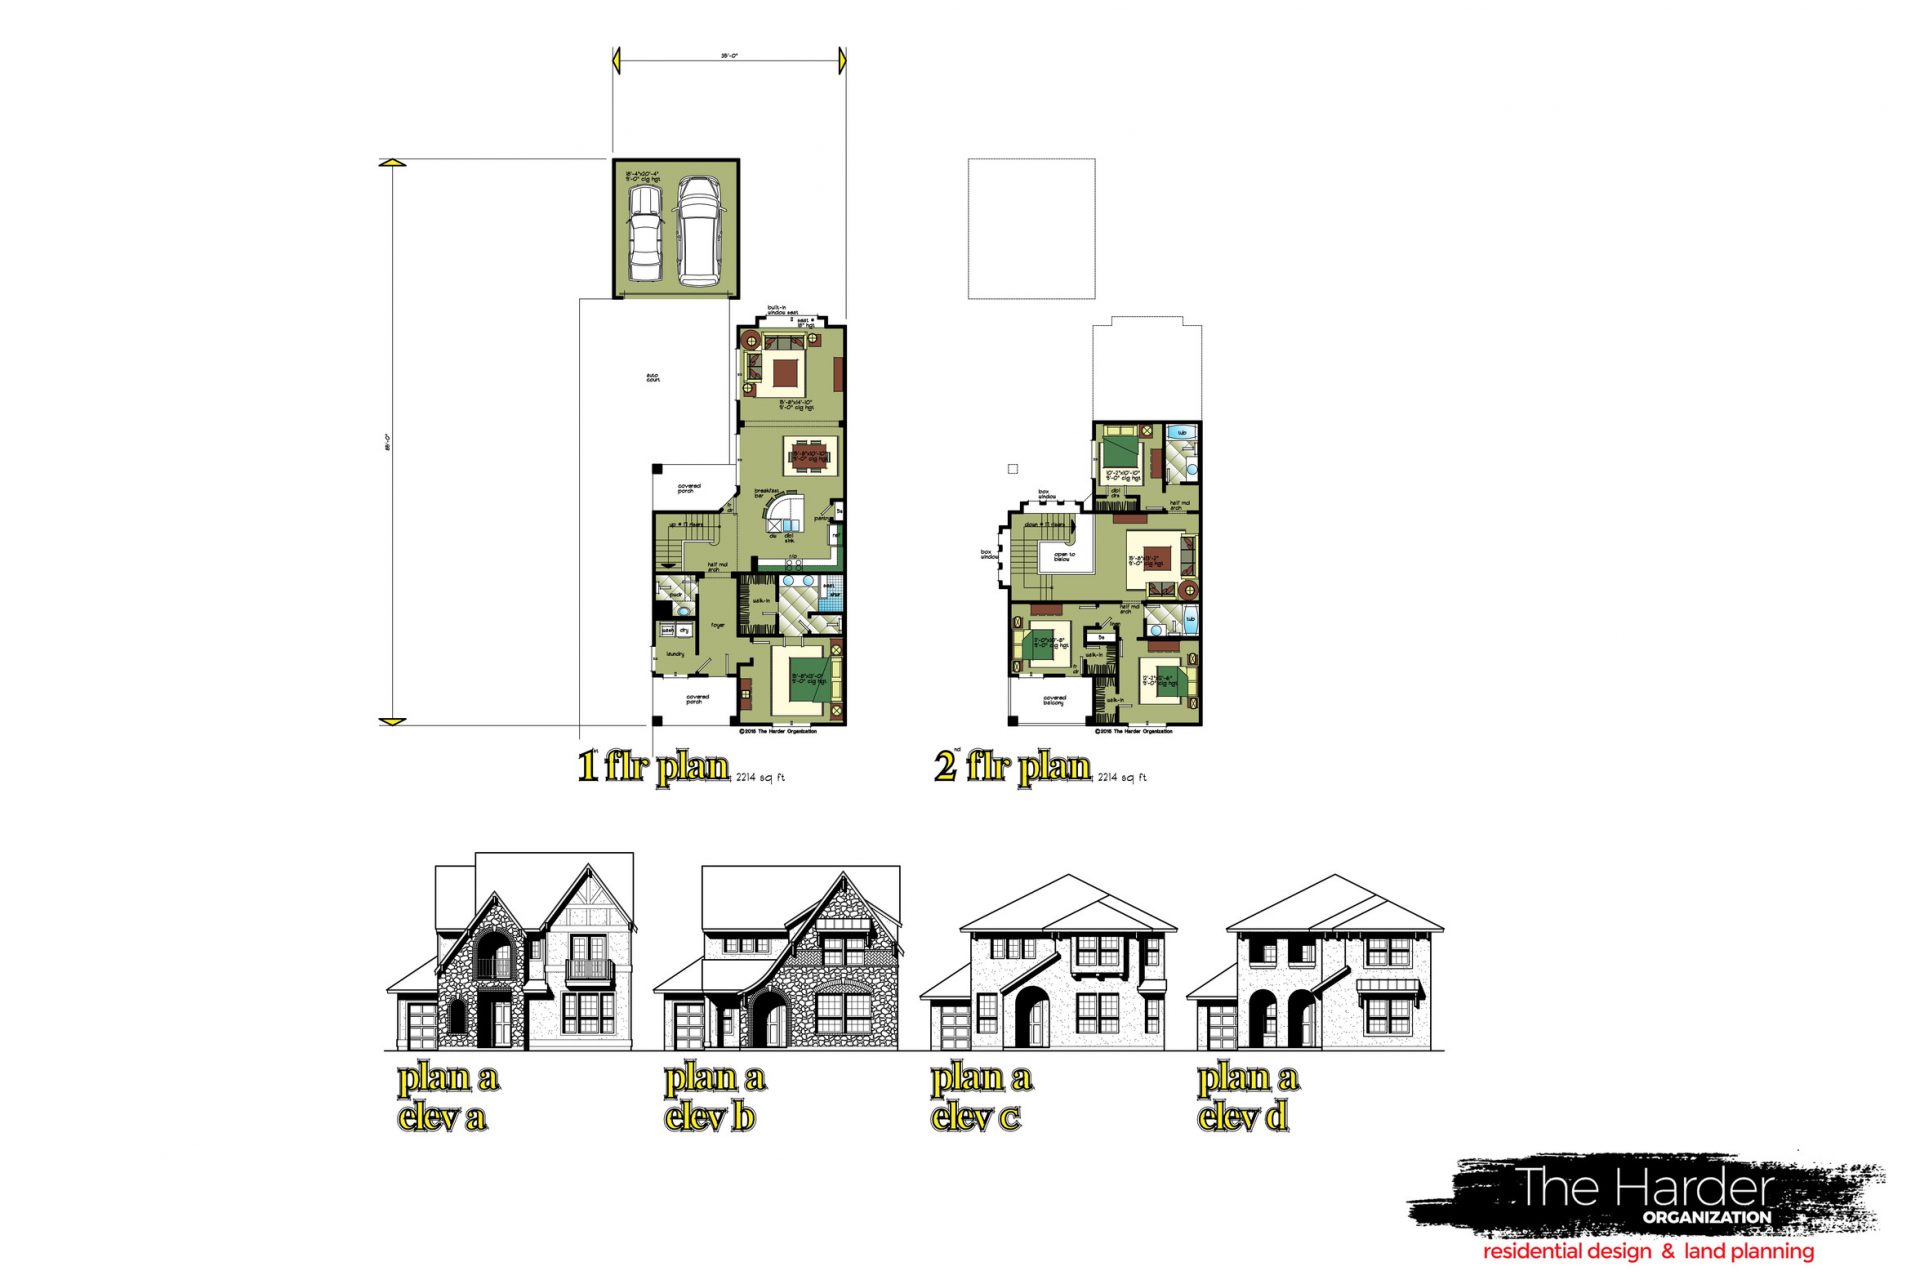 J:(Drawings)Meridian homesdetached gar site plan conceptdeta